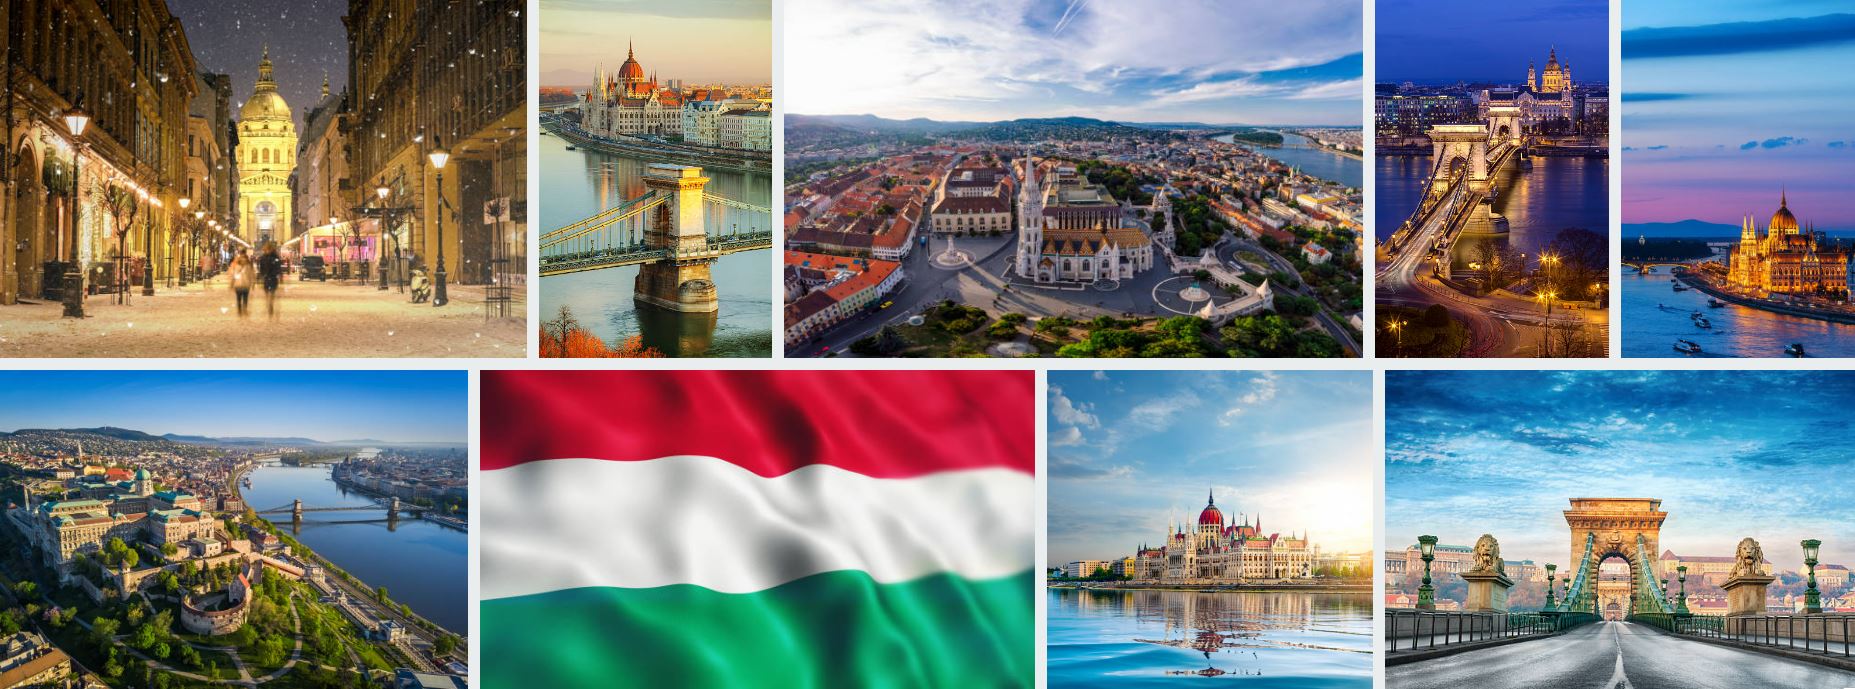 Hungary visa images